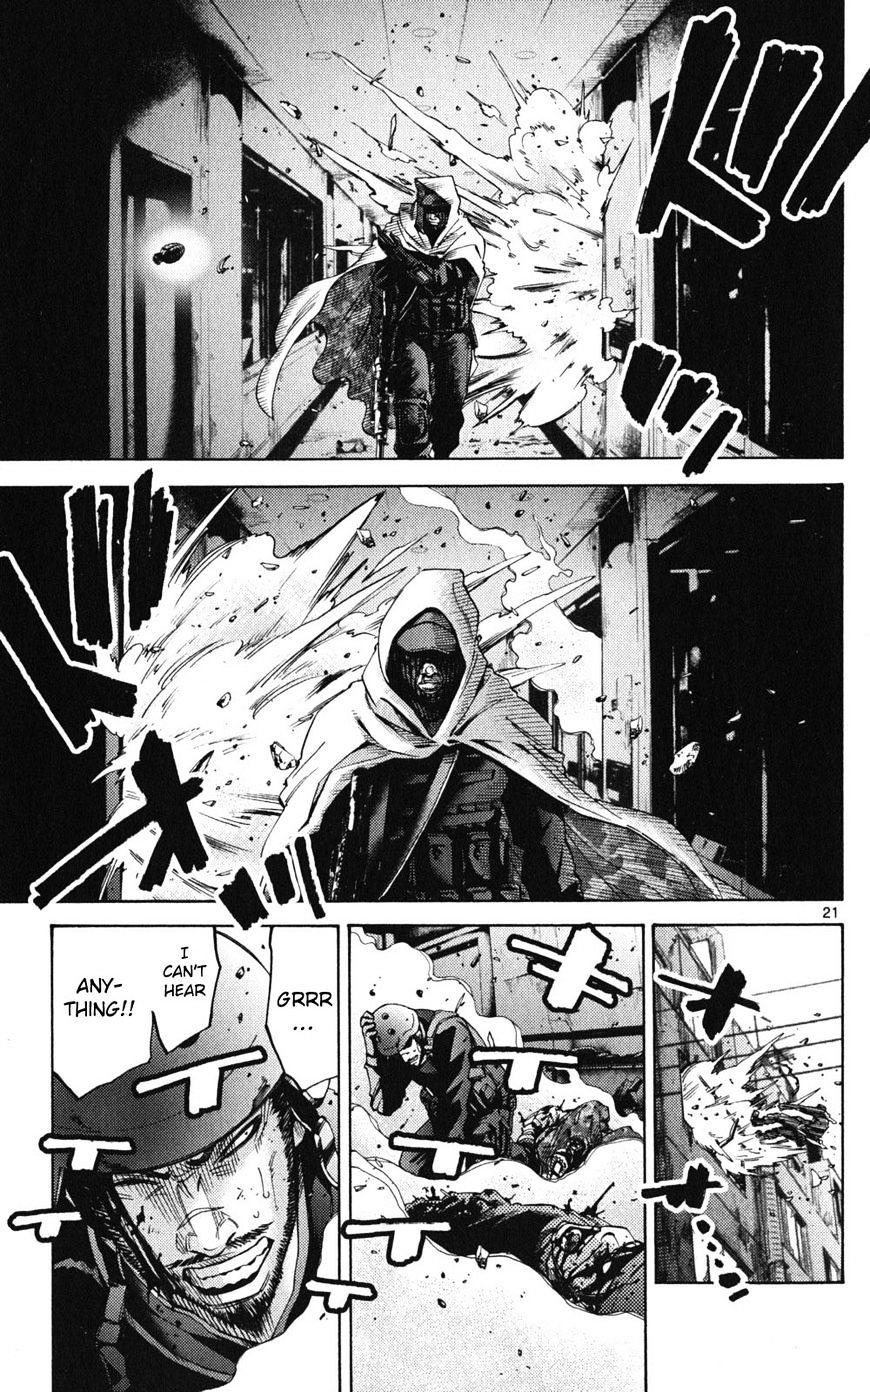 Imawa No Kuni No Alice Chapter 49.1 : Side Story 5 - King Of Spades (1) page 19 - Mangakakalot